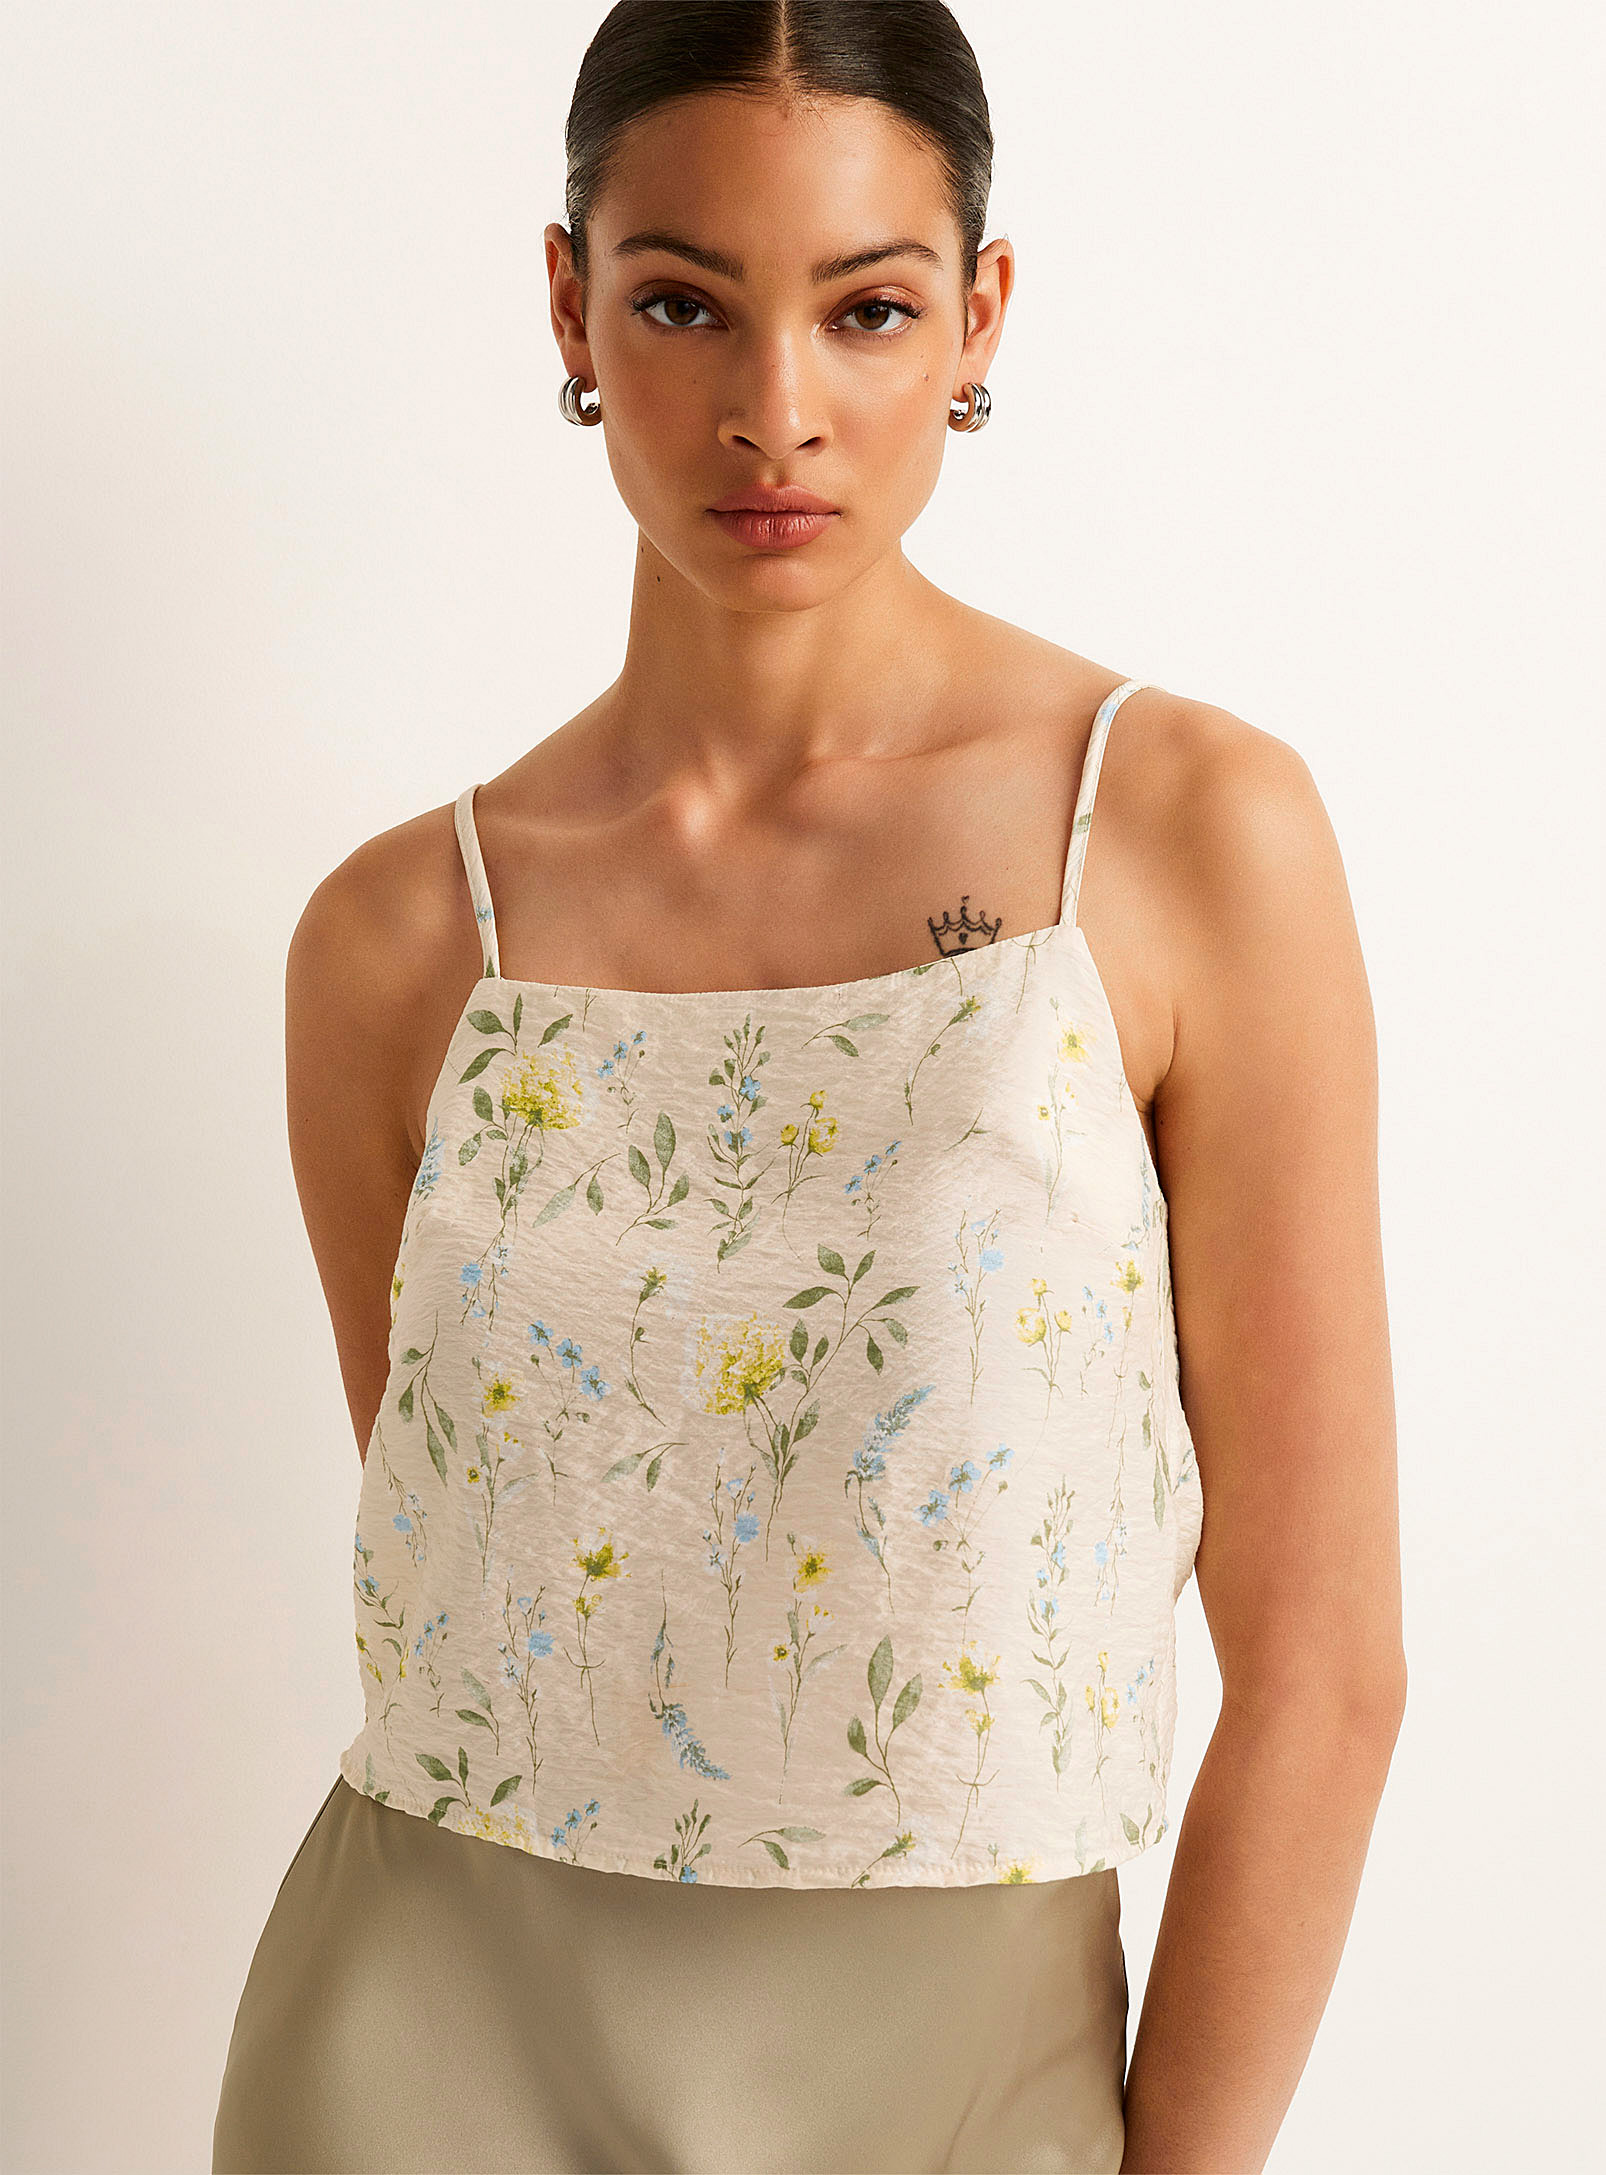 Vero Moda - Women's Wildflowers wrinkled texture Cami Top